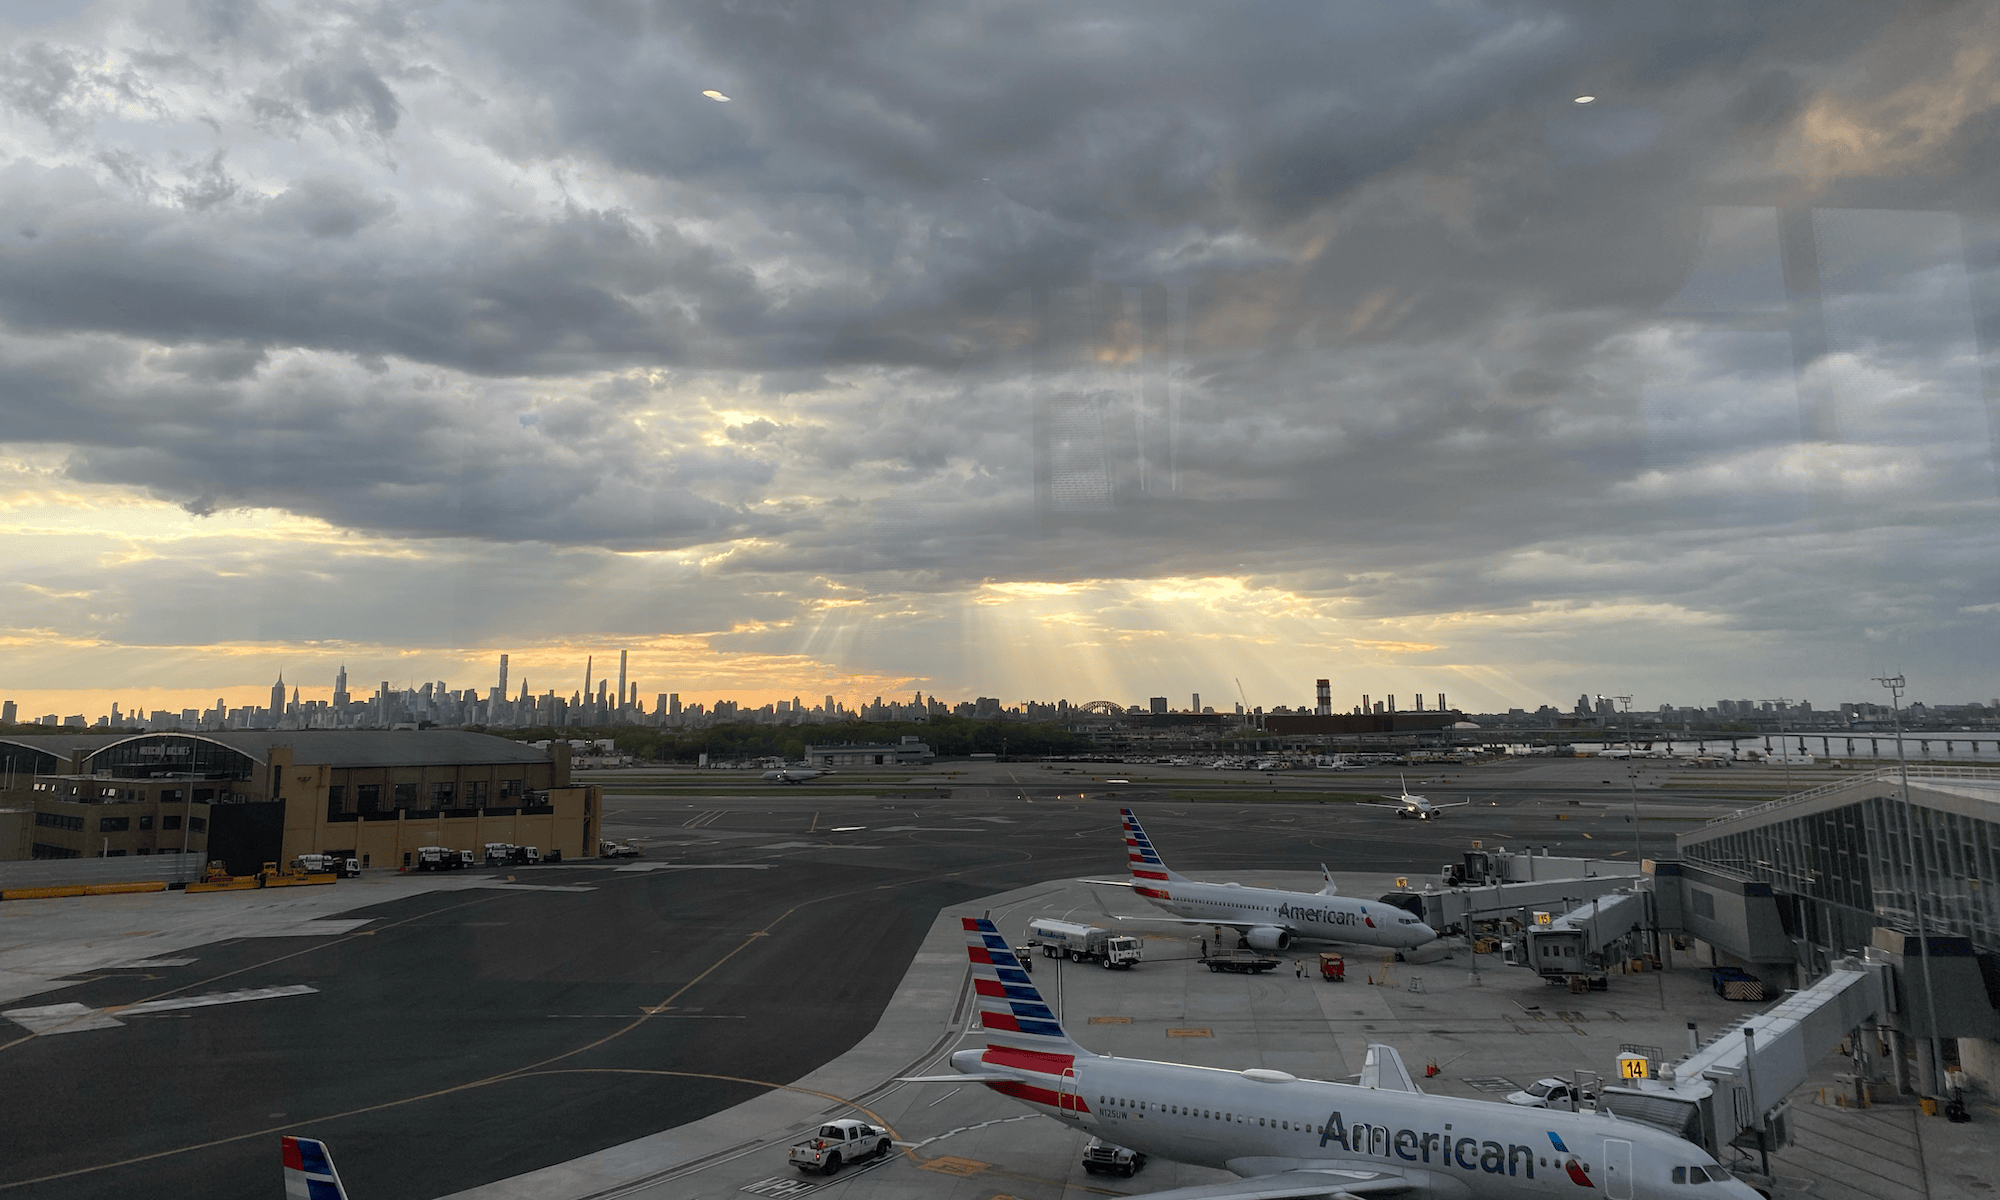 The beautiful rainy sunset view from LaGuardia terminal